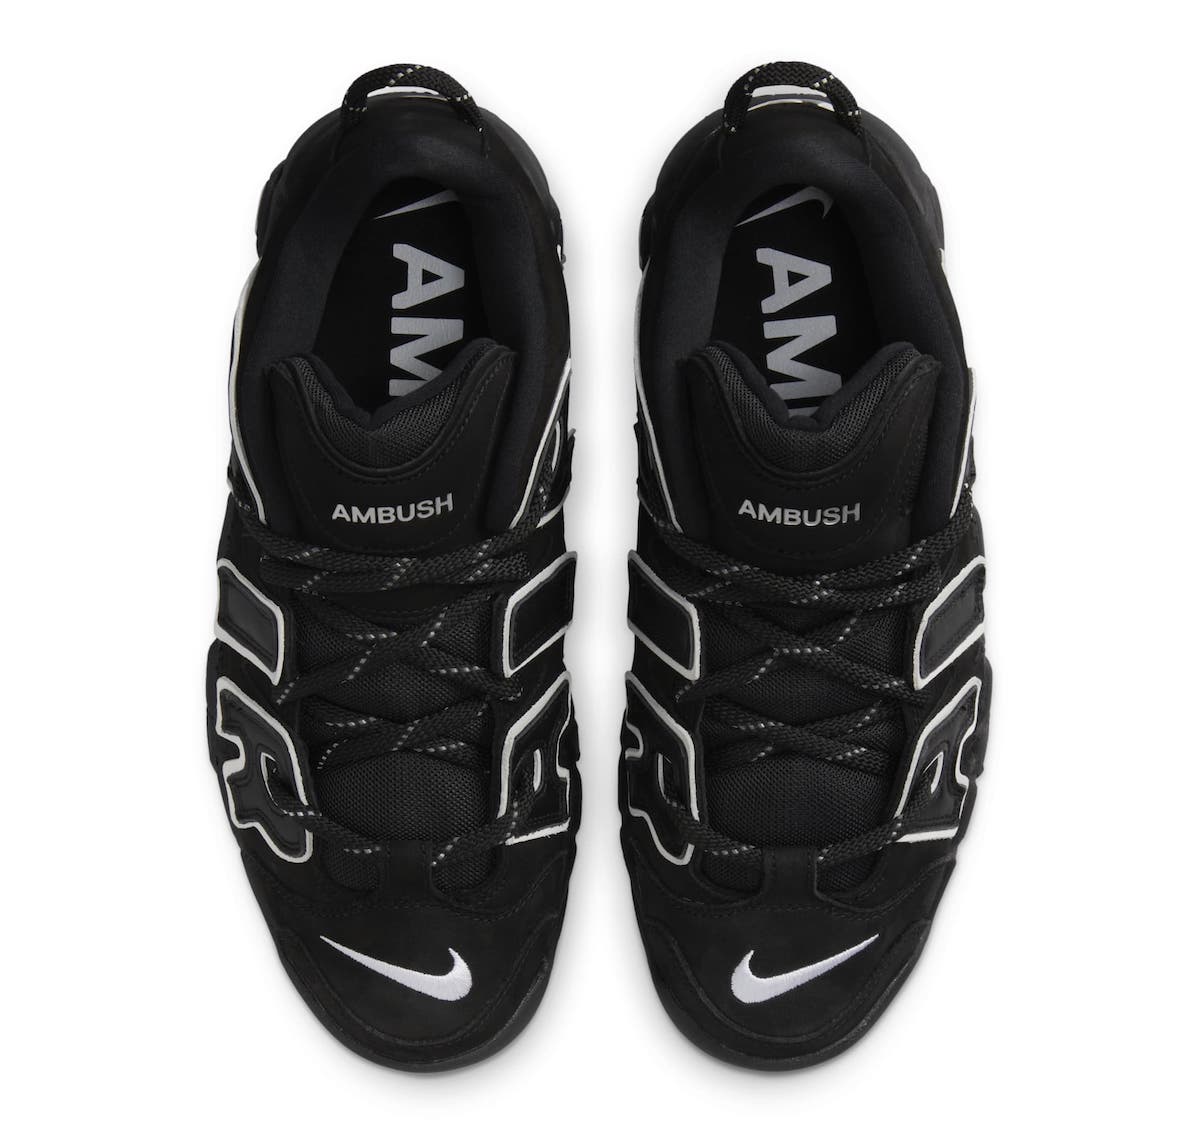 AMBUSH Nike Air More Uptempo Low Black White FB1299 001 Release Date 3